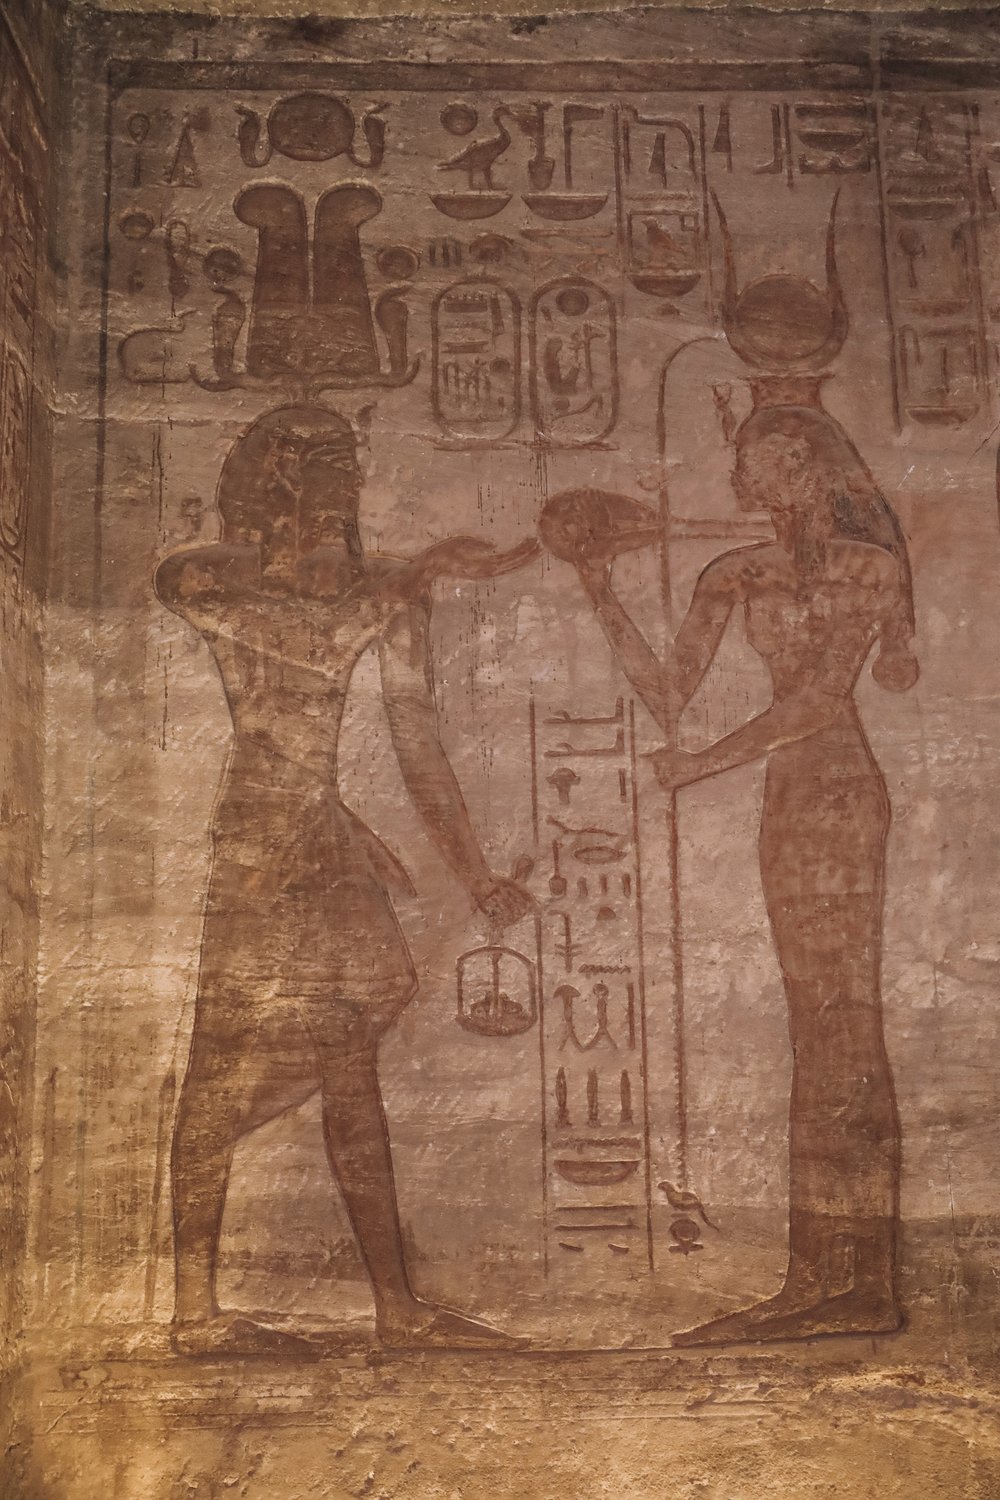 God offering - Abu Simbel - Egypt